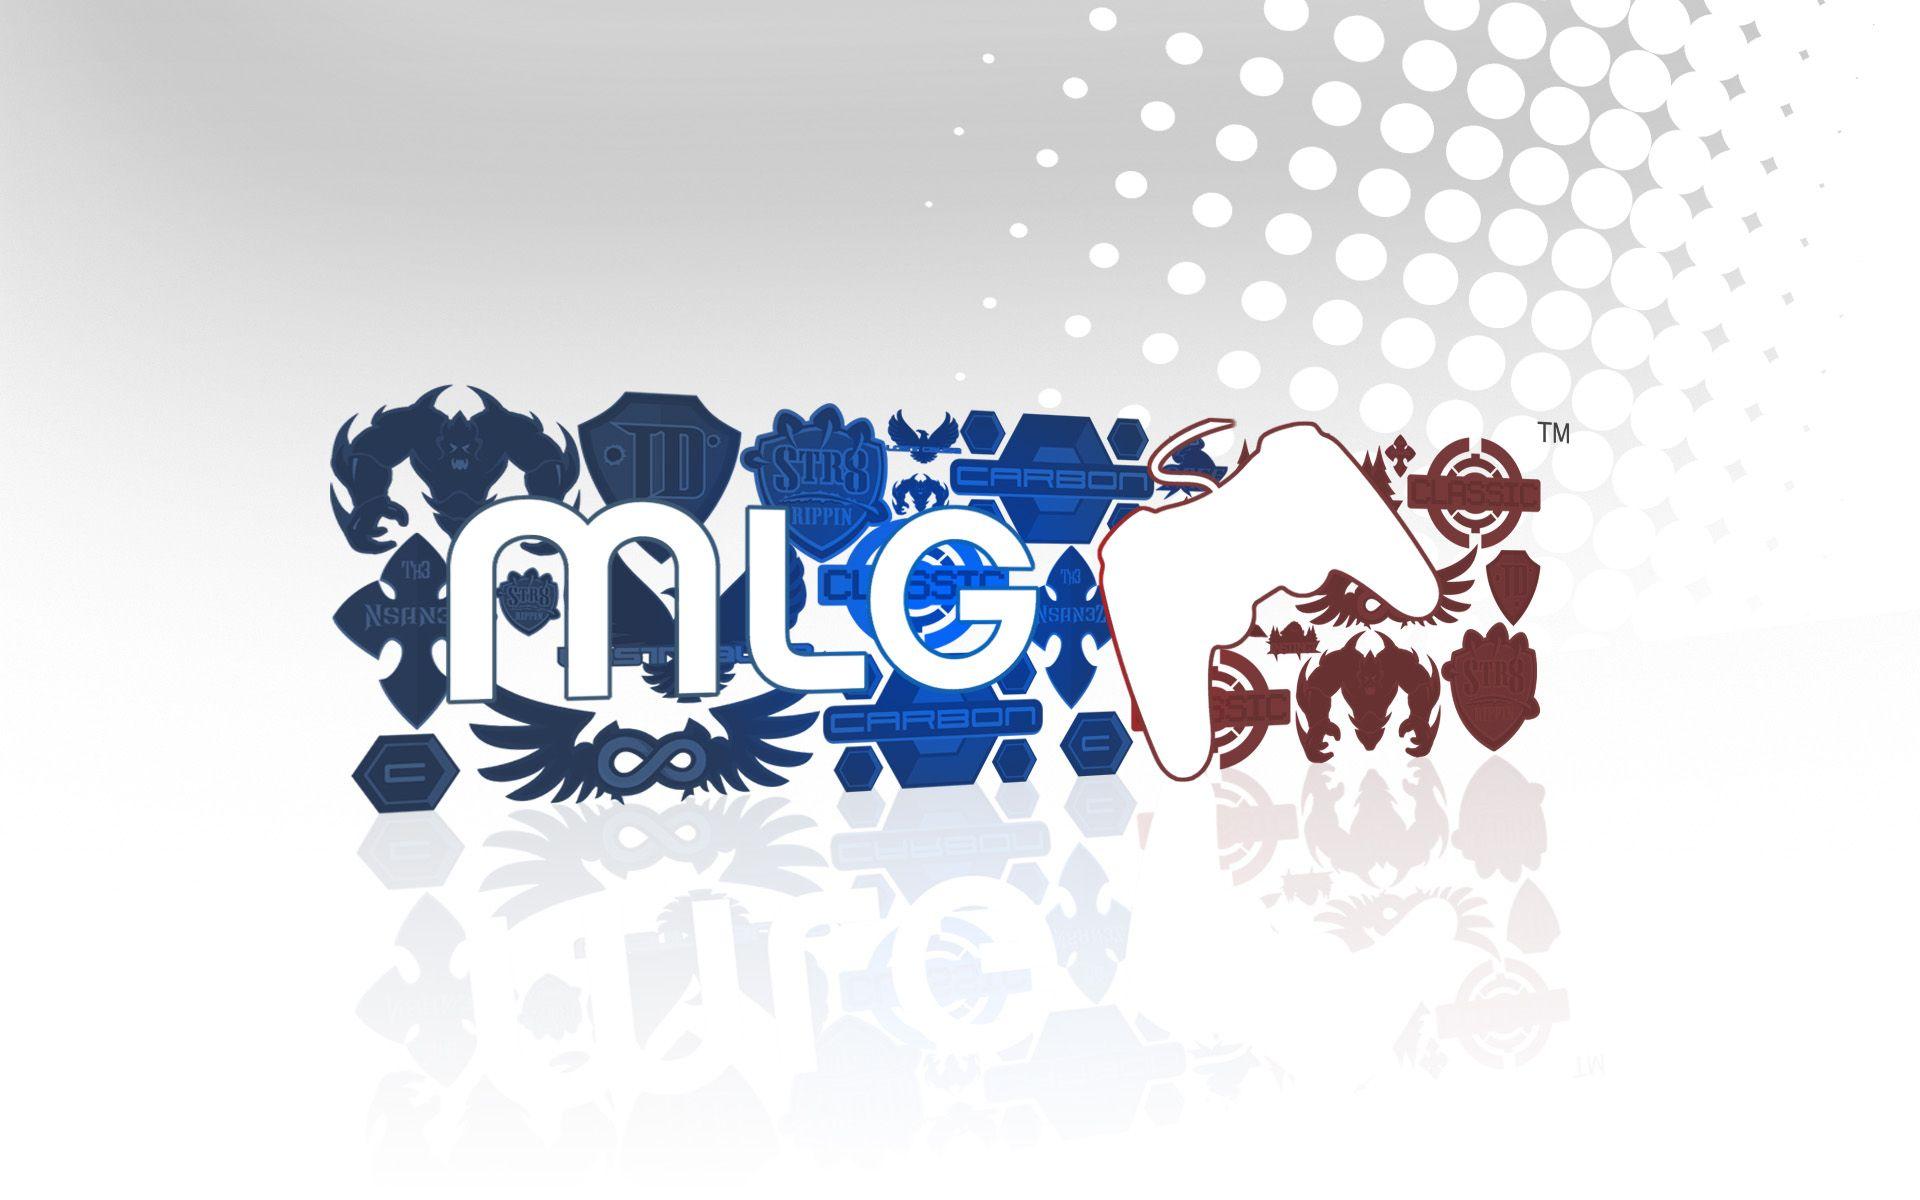 Download the MLG Team Logos Wallpaper, MLG Team Logos iPhone